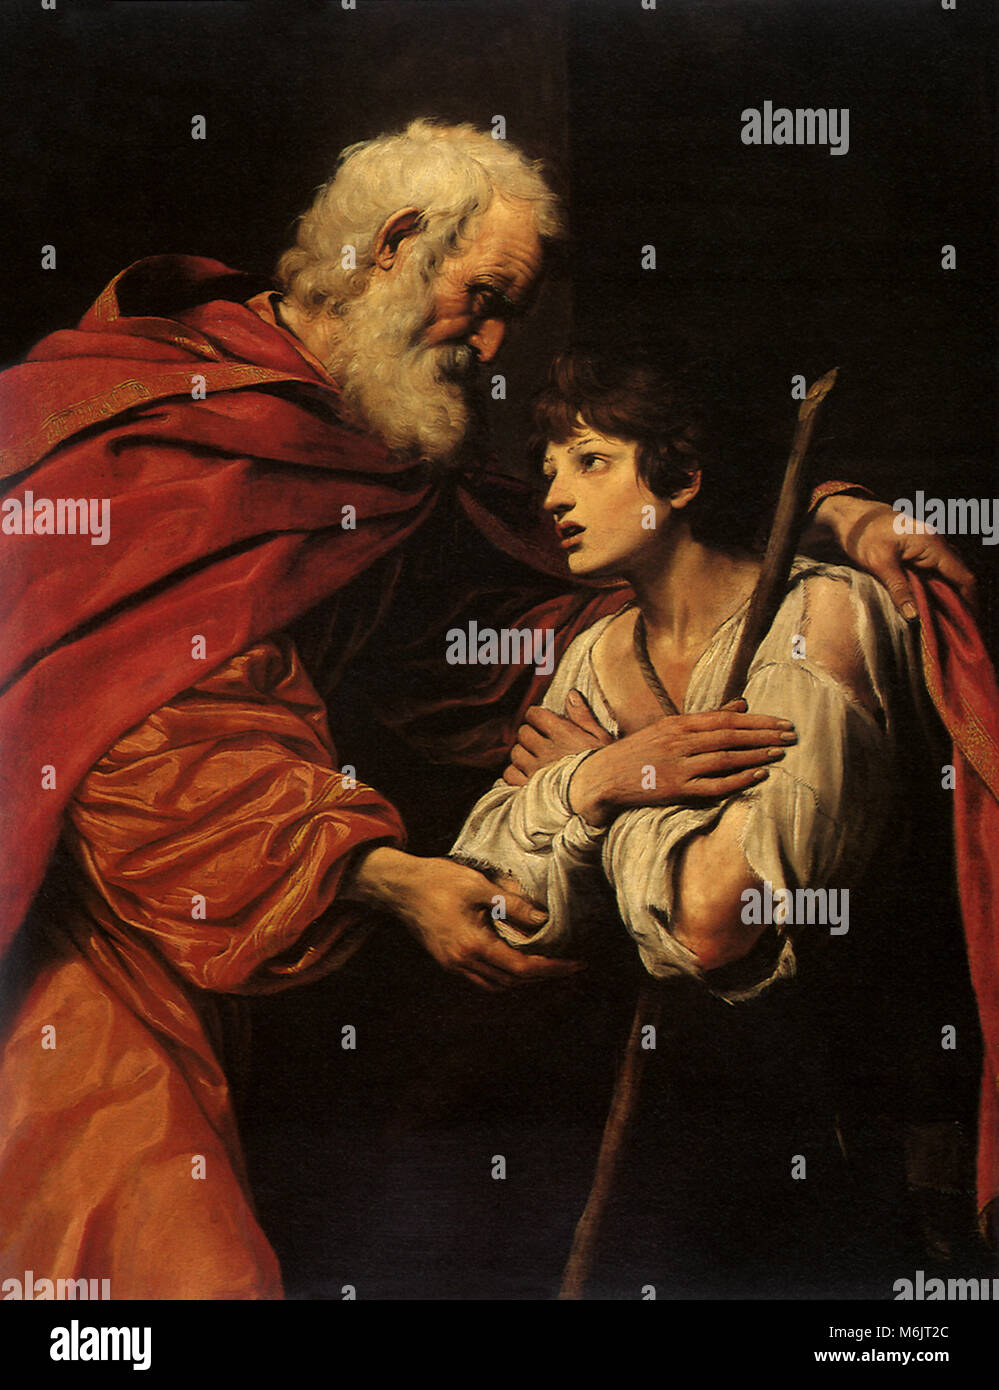 The Return of the Prodigal Son, Spada, Lionello, 1610. Stock Photo